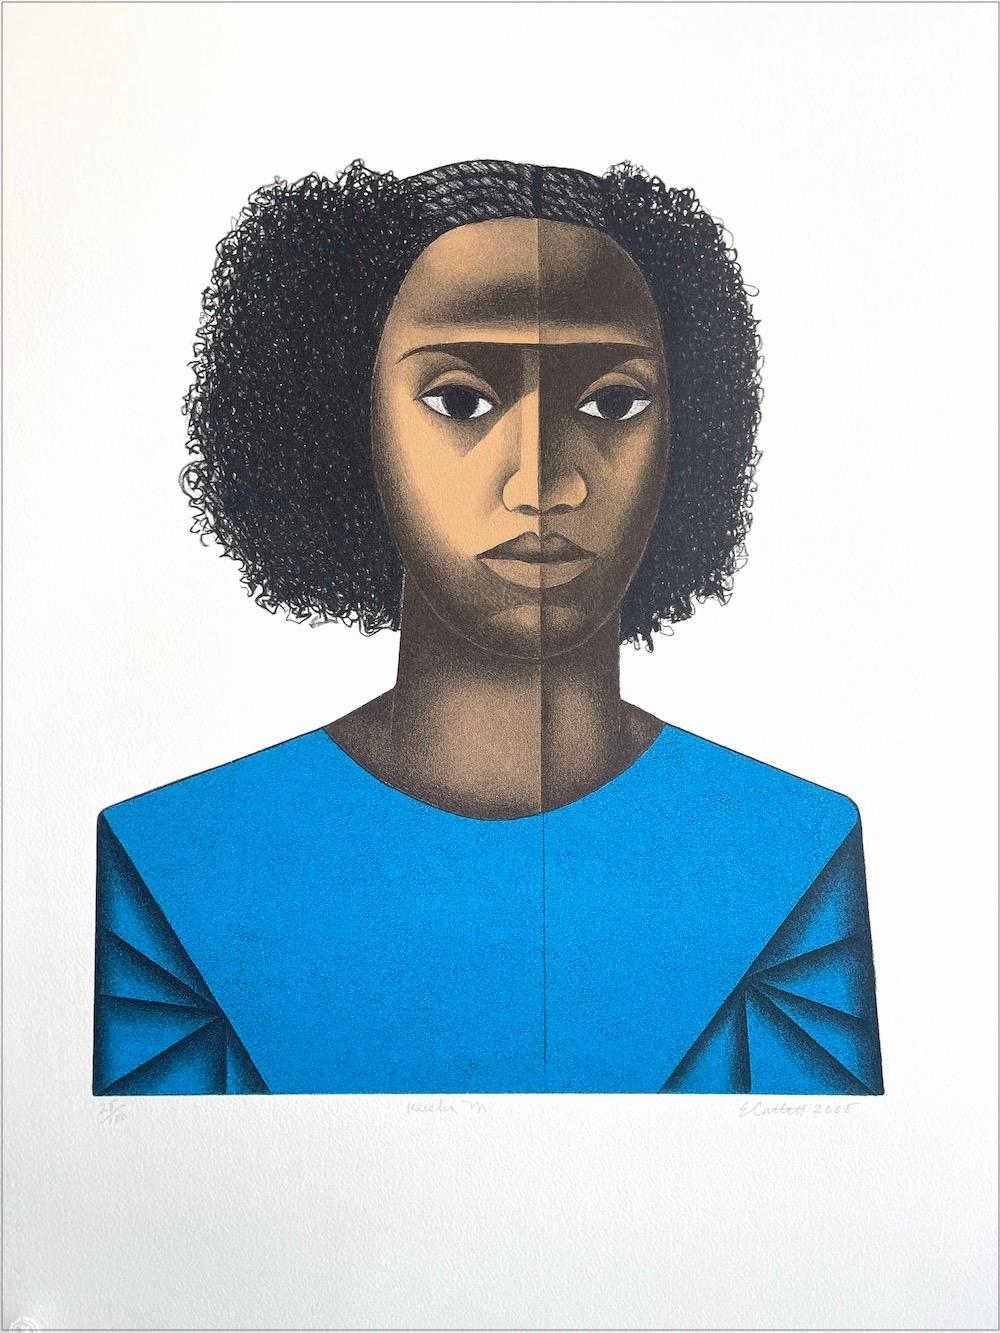 Elizabeth Catlett Figurative Print - KEISHA M. Hand Drawn Lithograph, Young Black Female Portrait, Afro Hairstyle